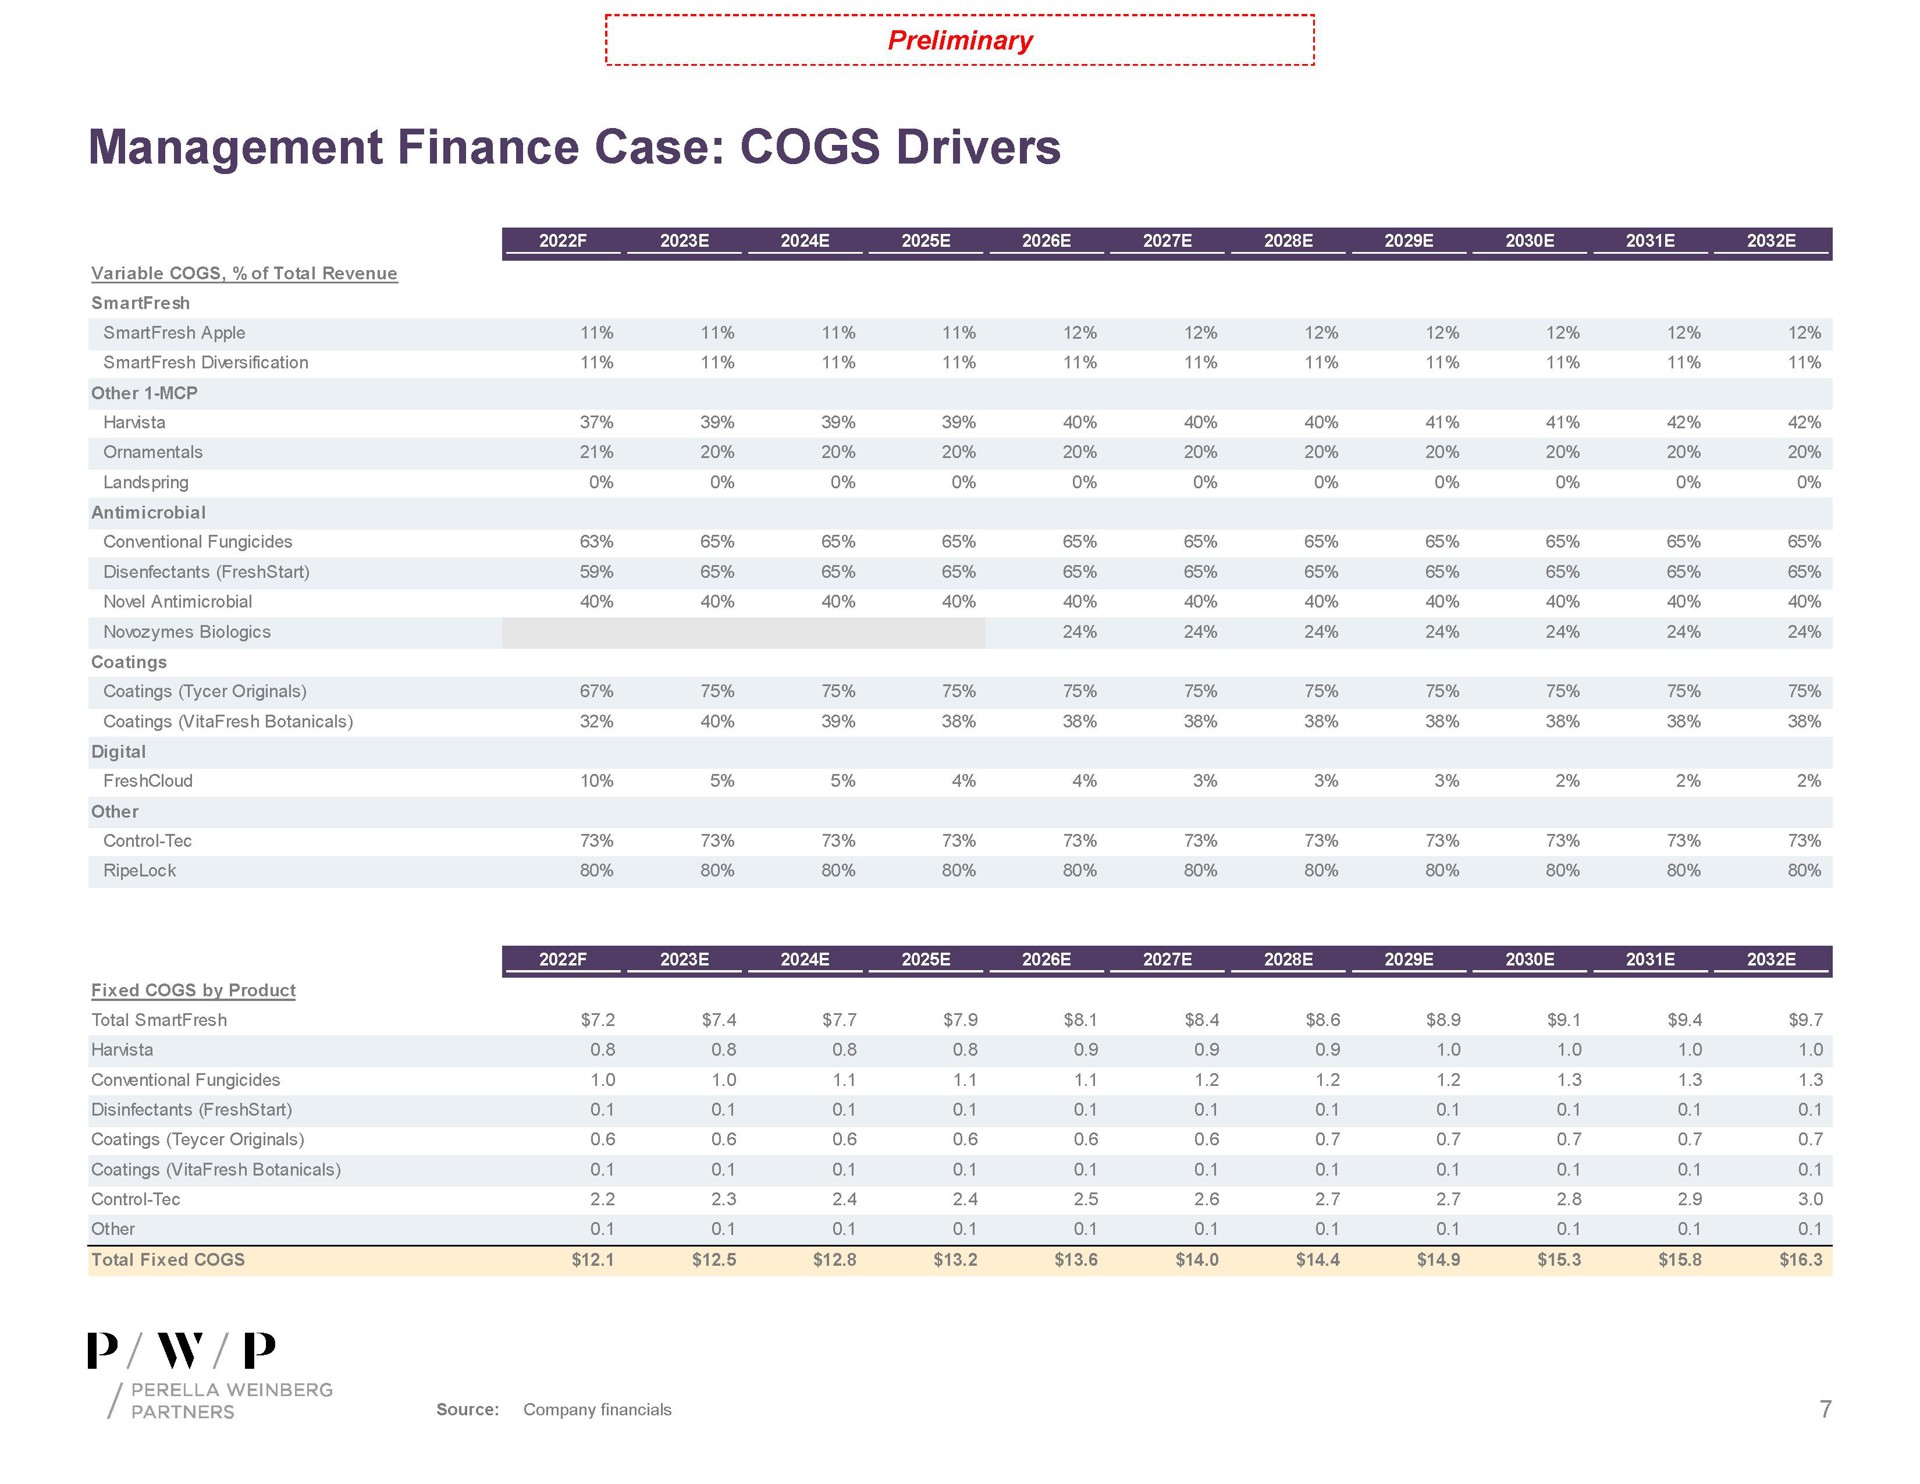 management finance case cogs drivers | Perella Weinberg Partners